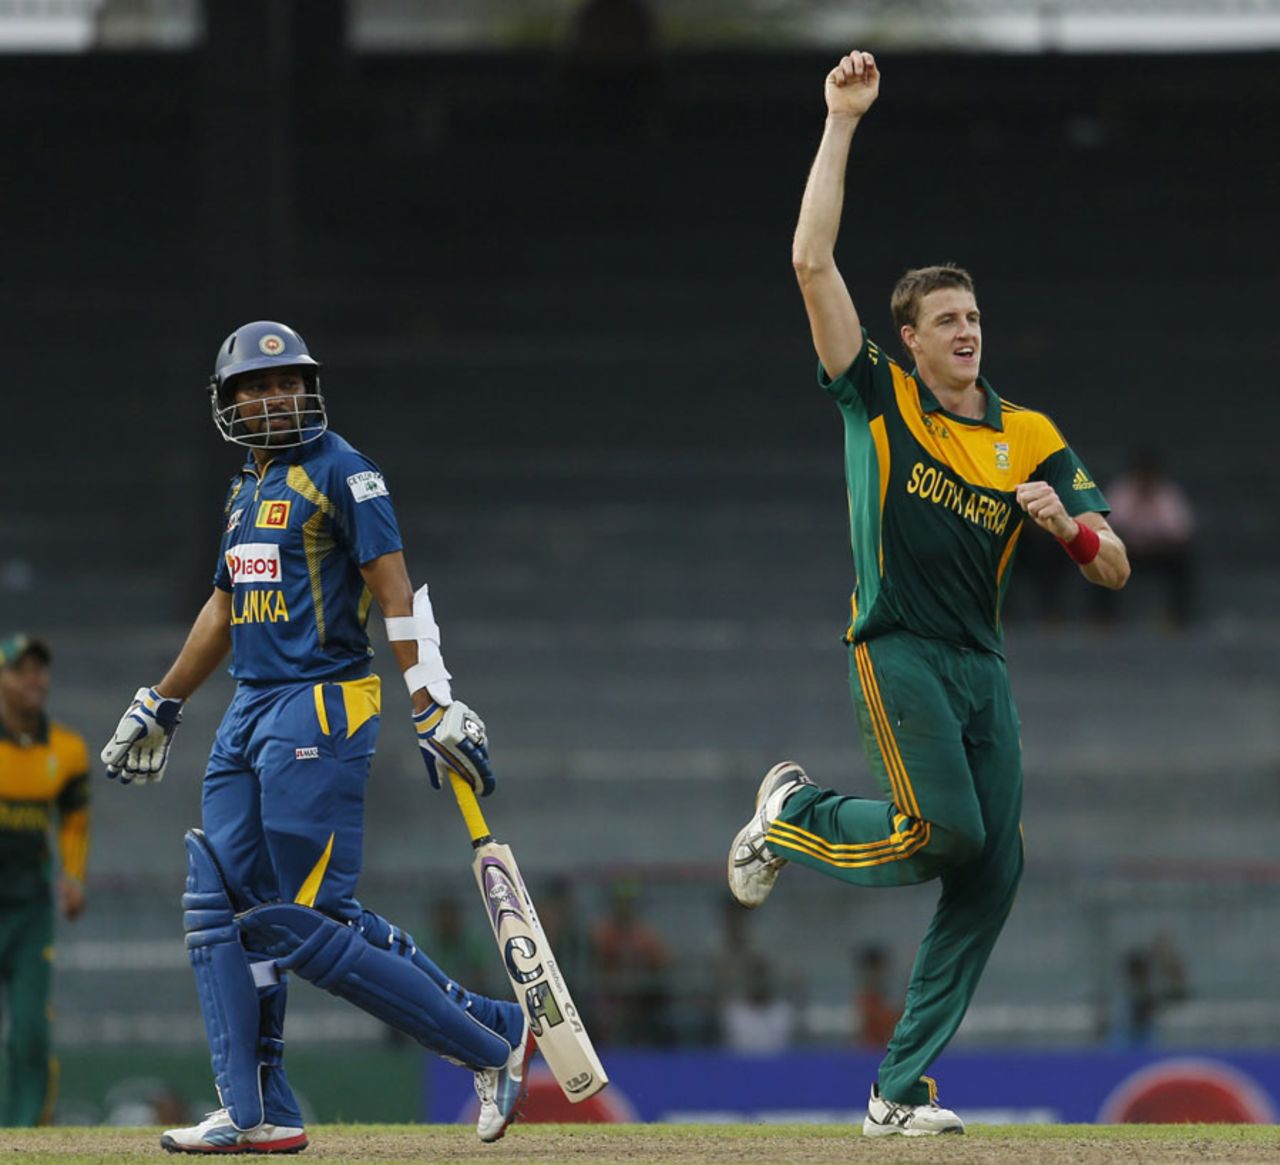 Morne Morkel celebrates after dismissing Tillakaratne Dilshan, Sri Lanka v South Africa, 2nd ODI, Colombo, July 23, 2013